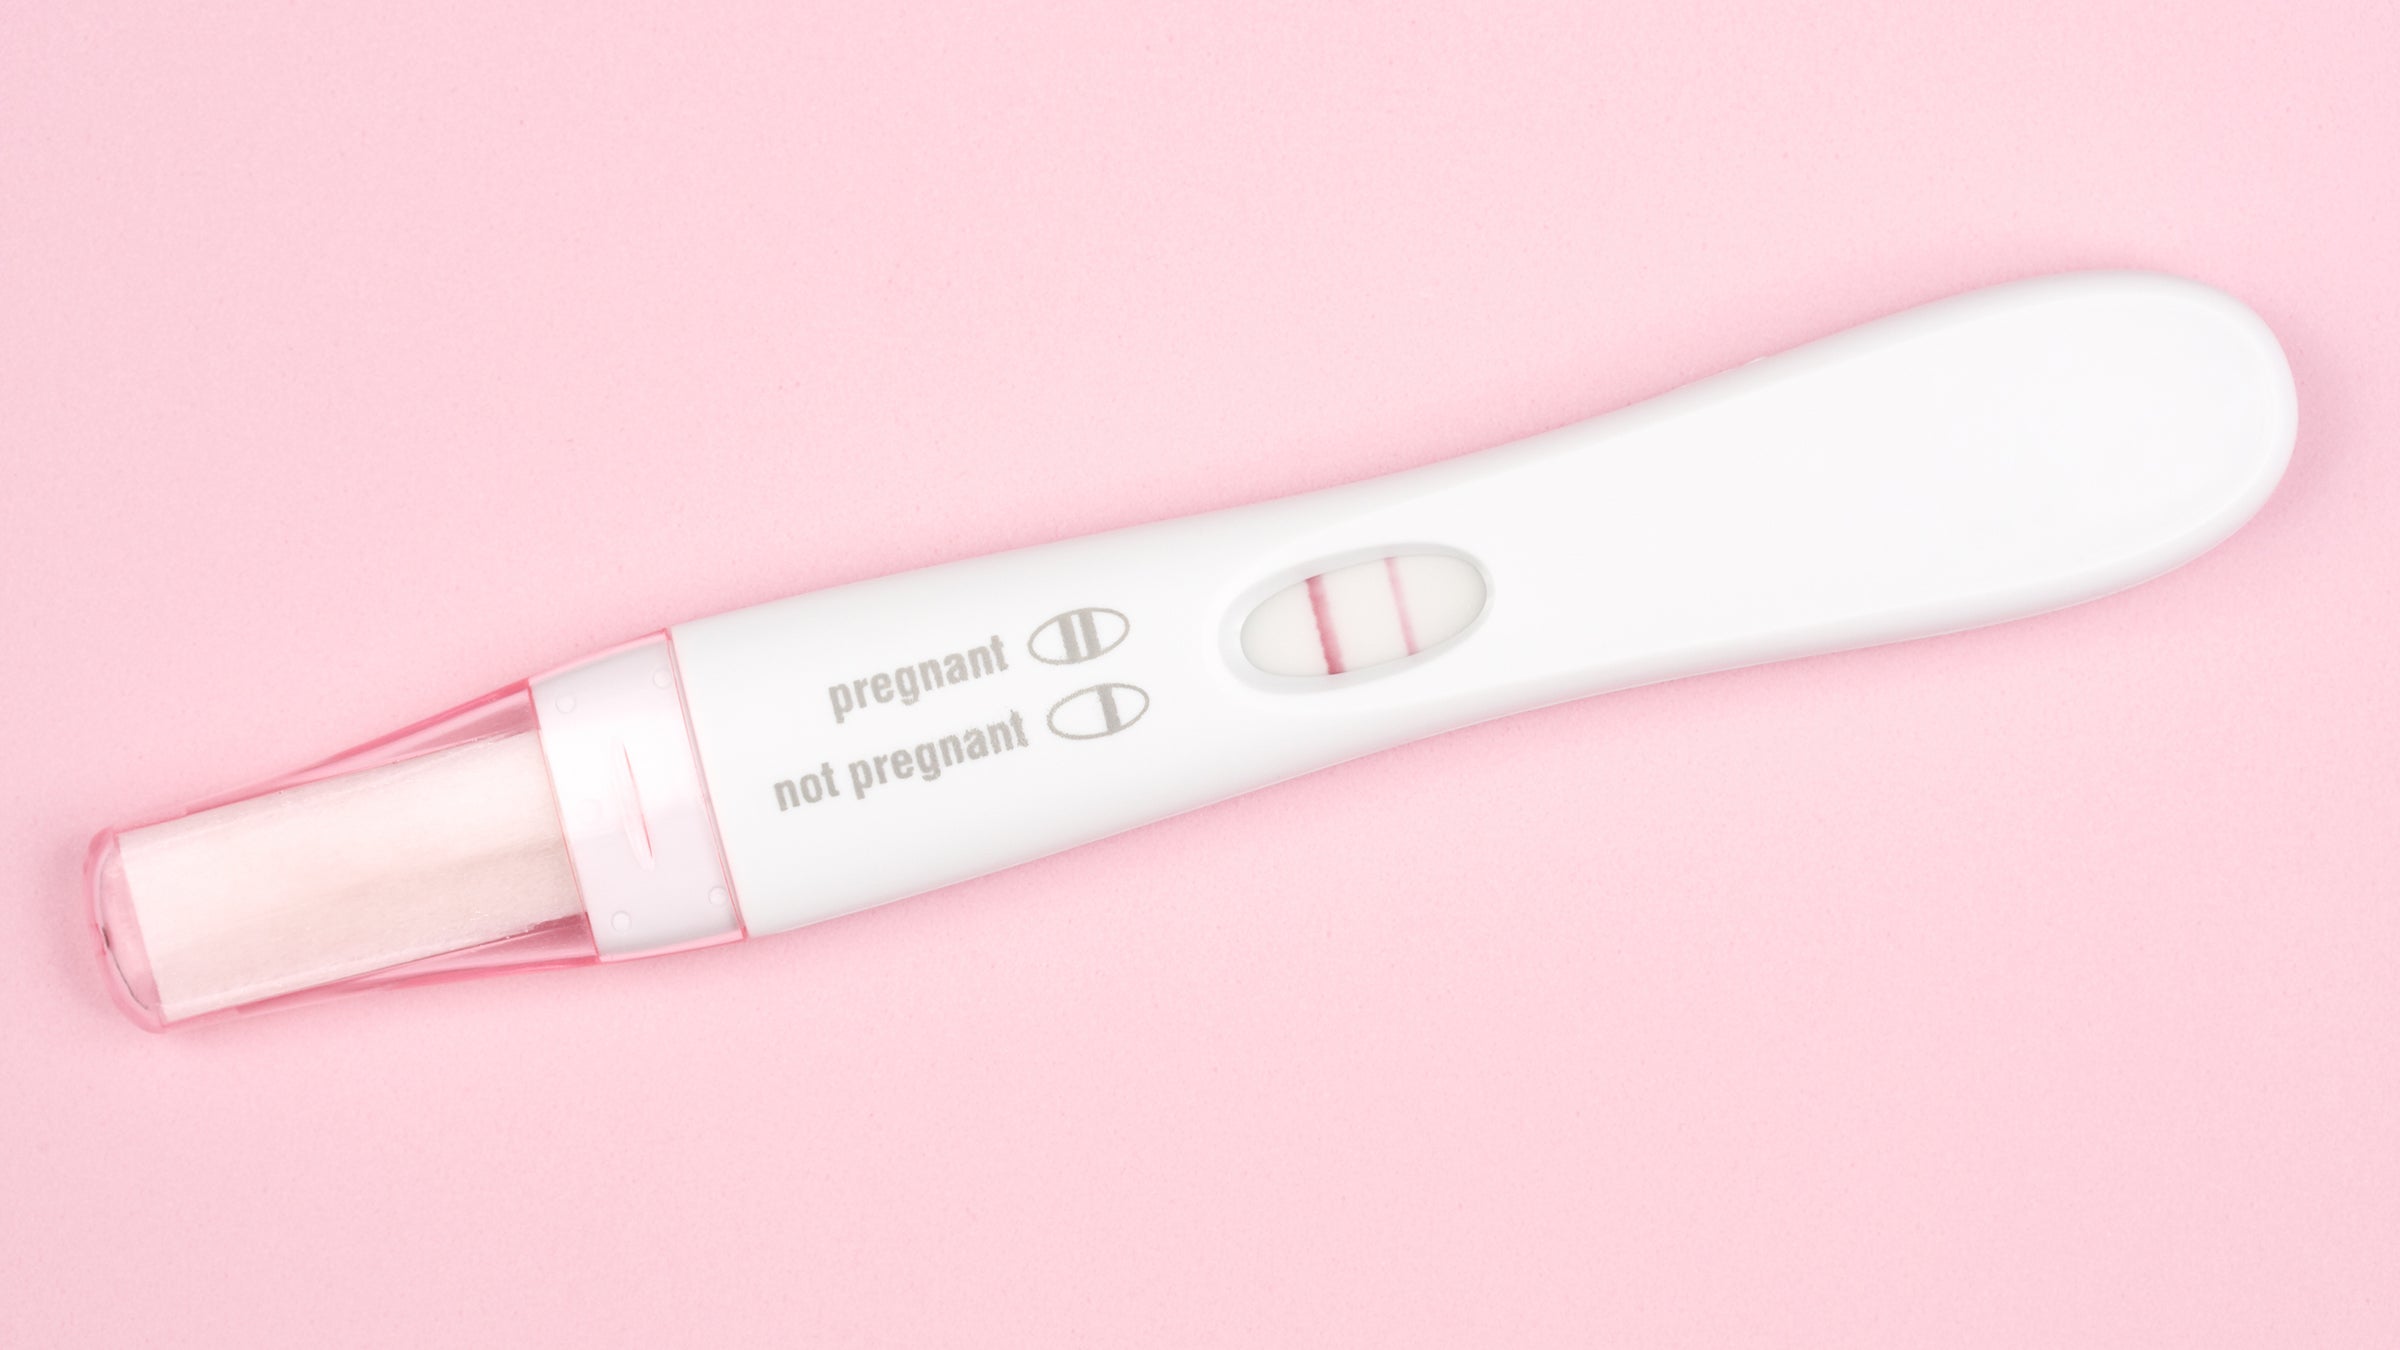 Pregnancy test on a light-pink background.